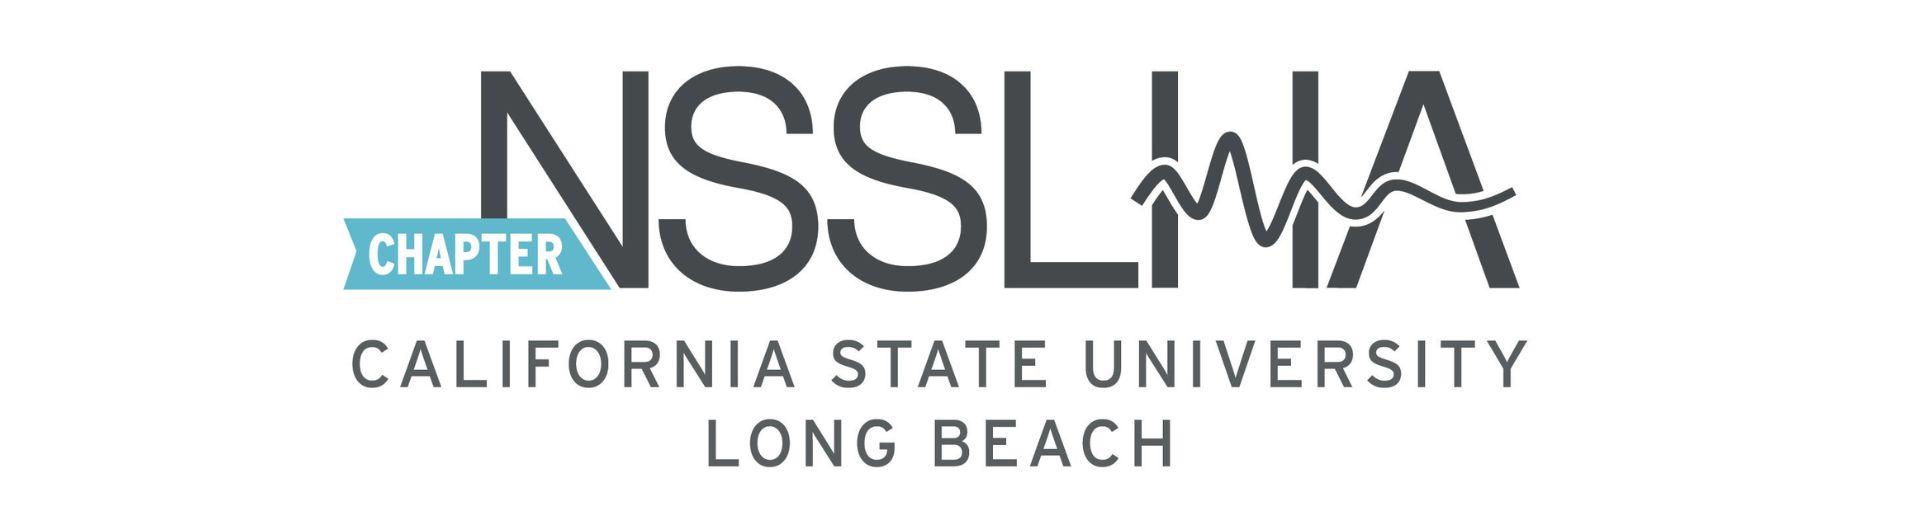 NSSLHA California State University Long Beach